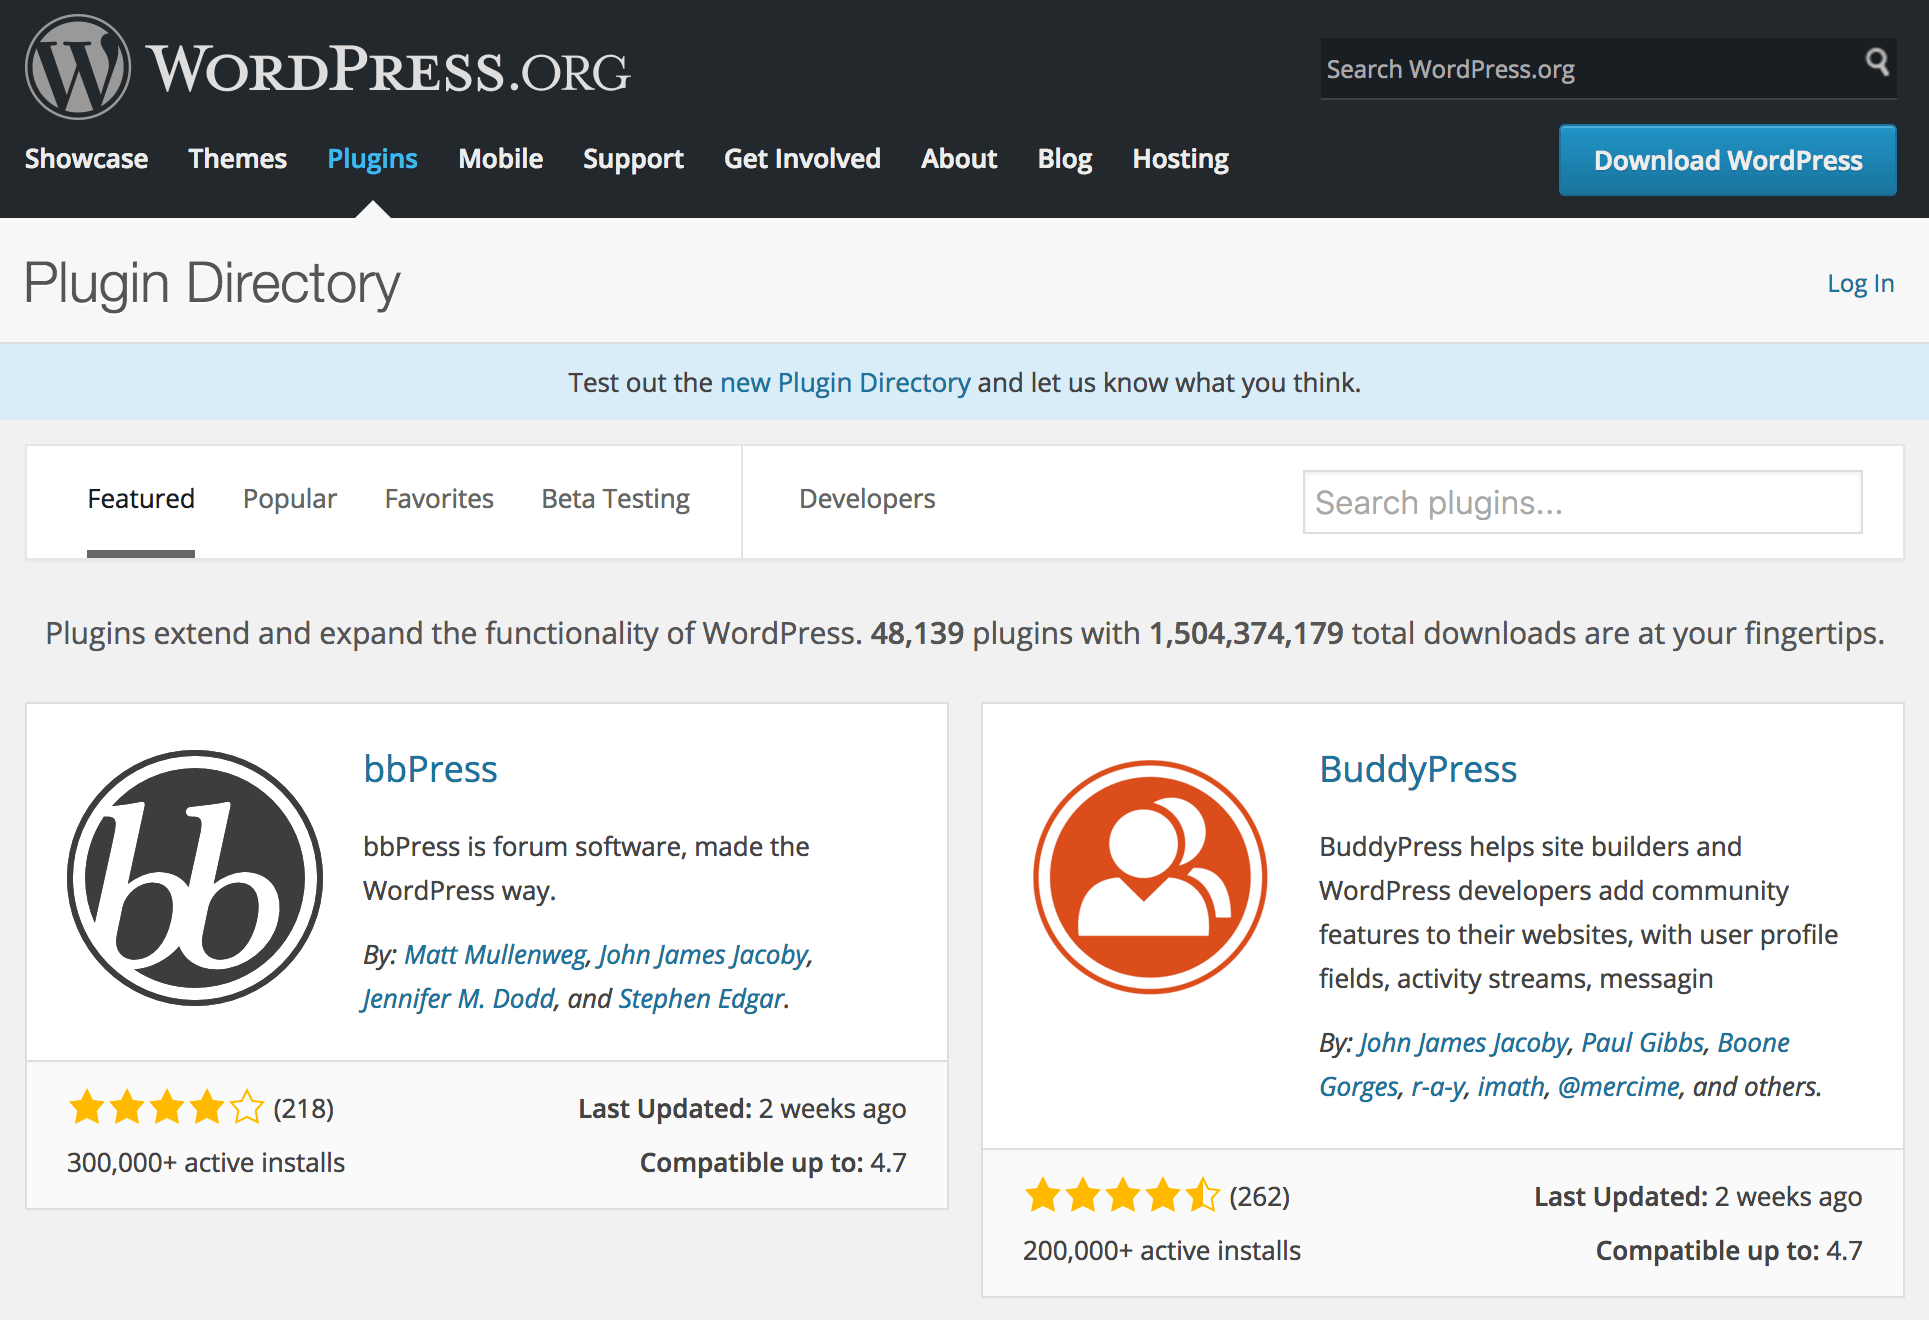 The WordPress.org Plugin Directory